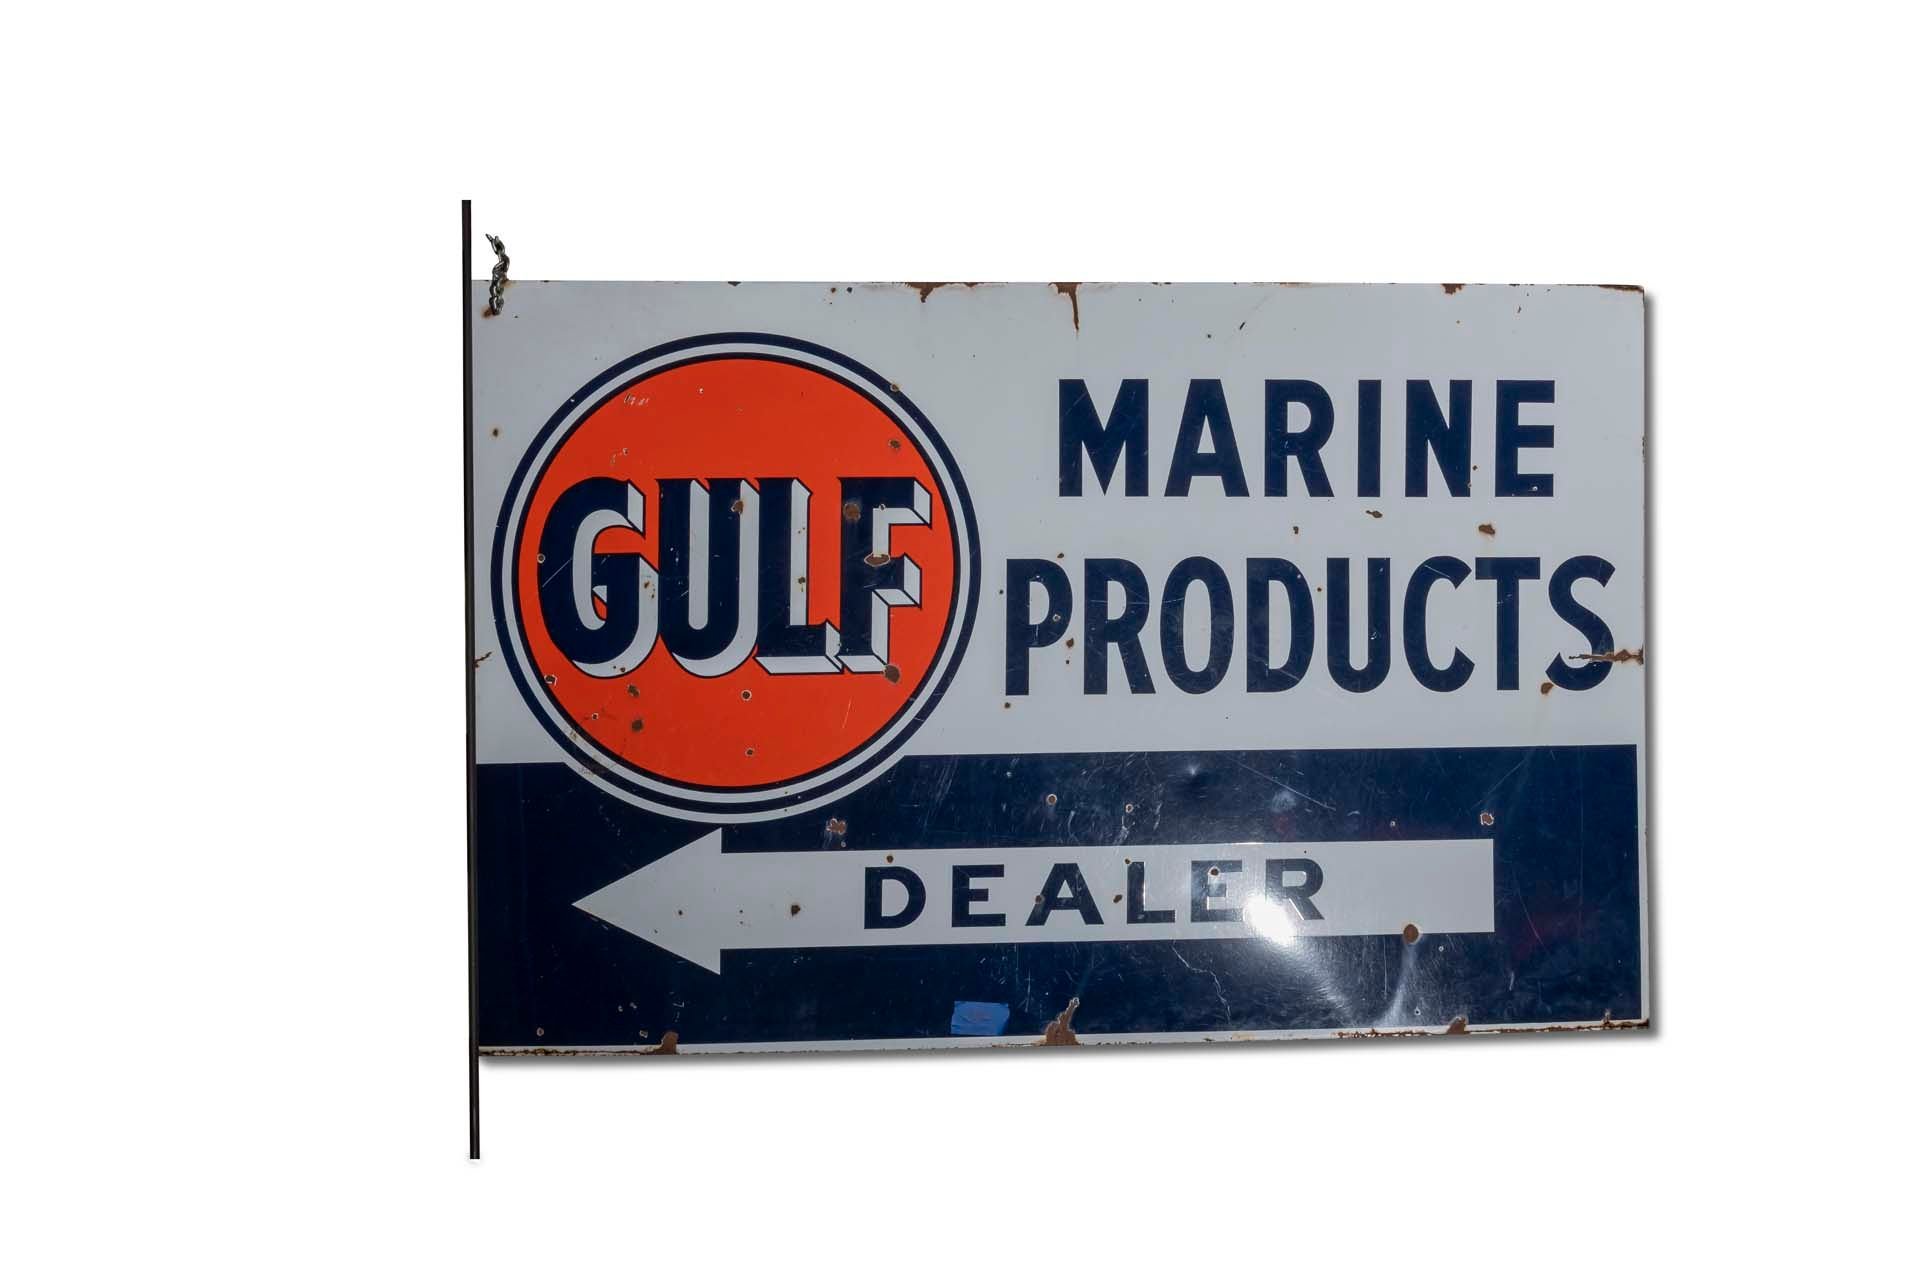 For Sale 'Gulf Marine Products Dealer' Porcelain Sign